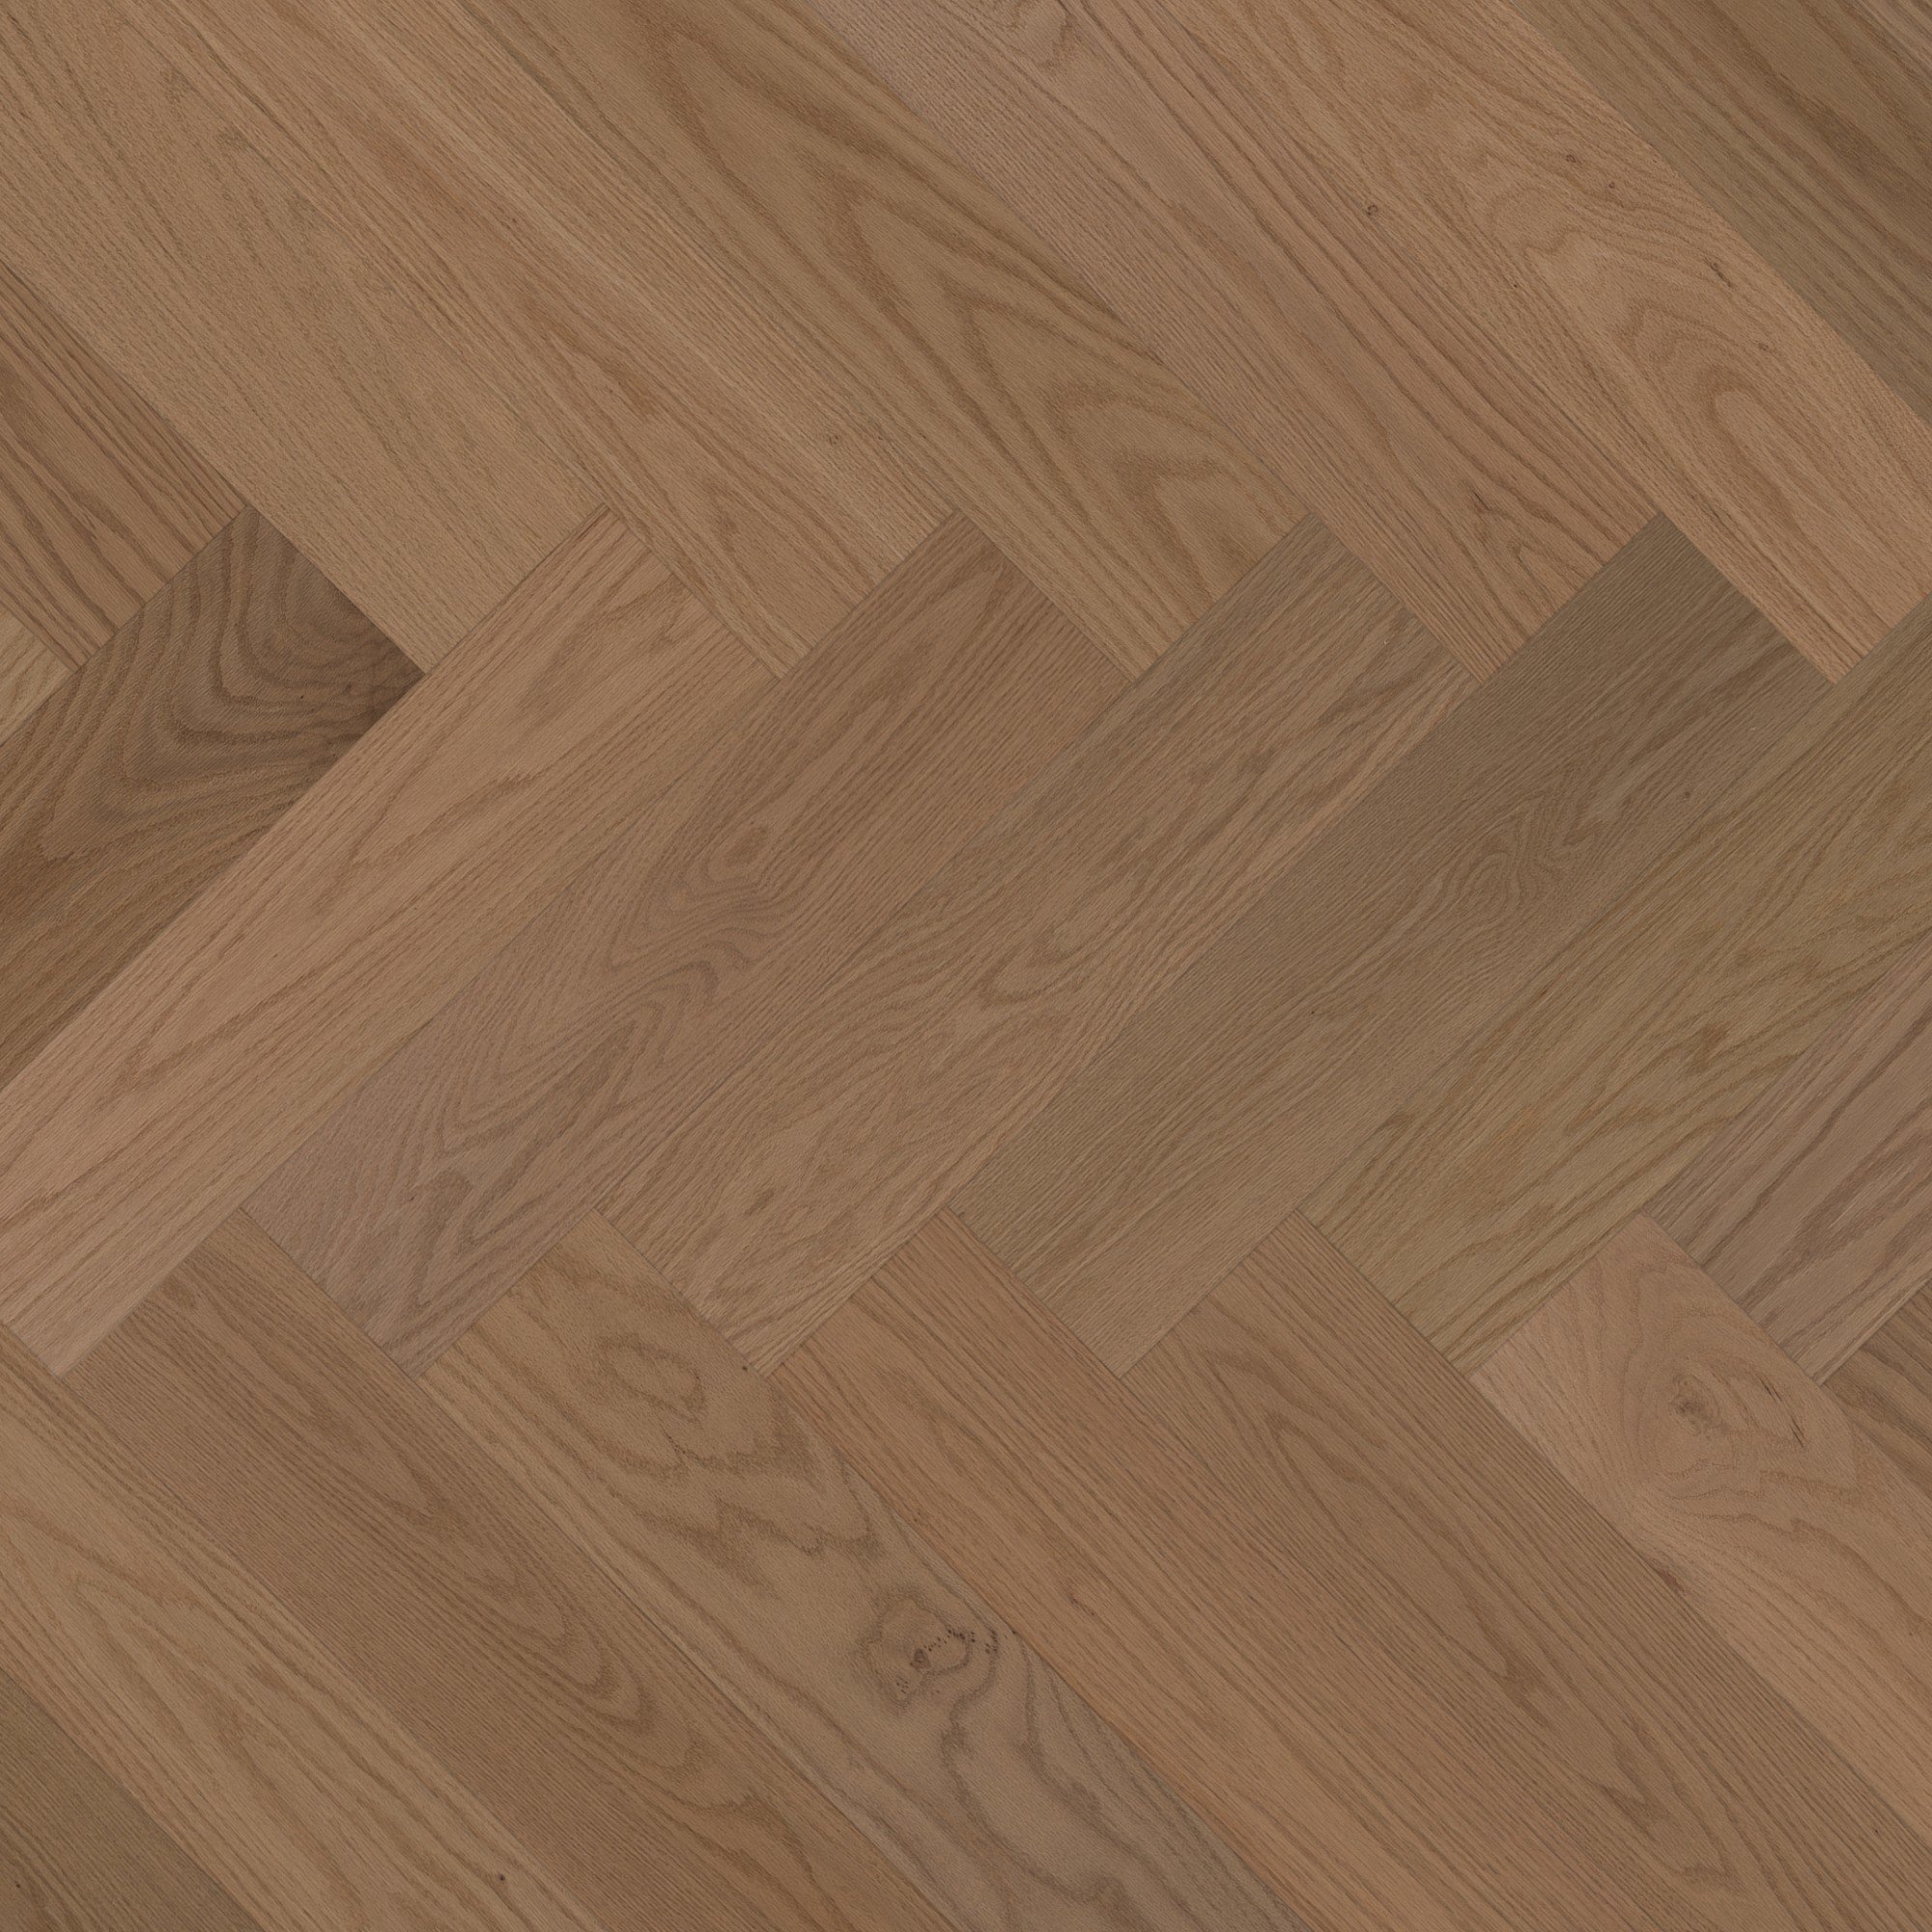 Oak Tofino Exclusive Brushed - Floor image